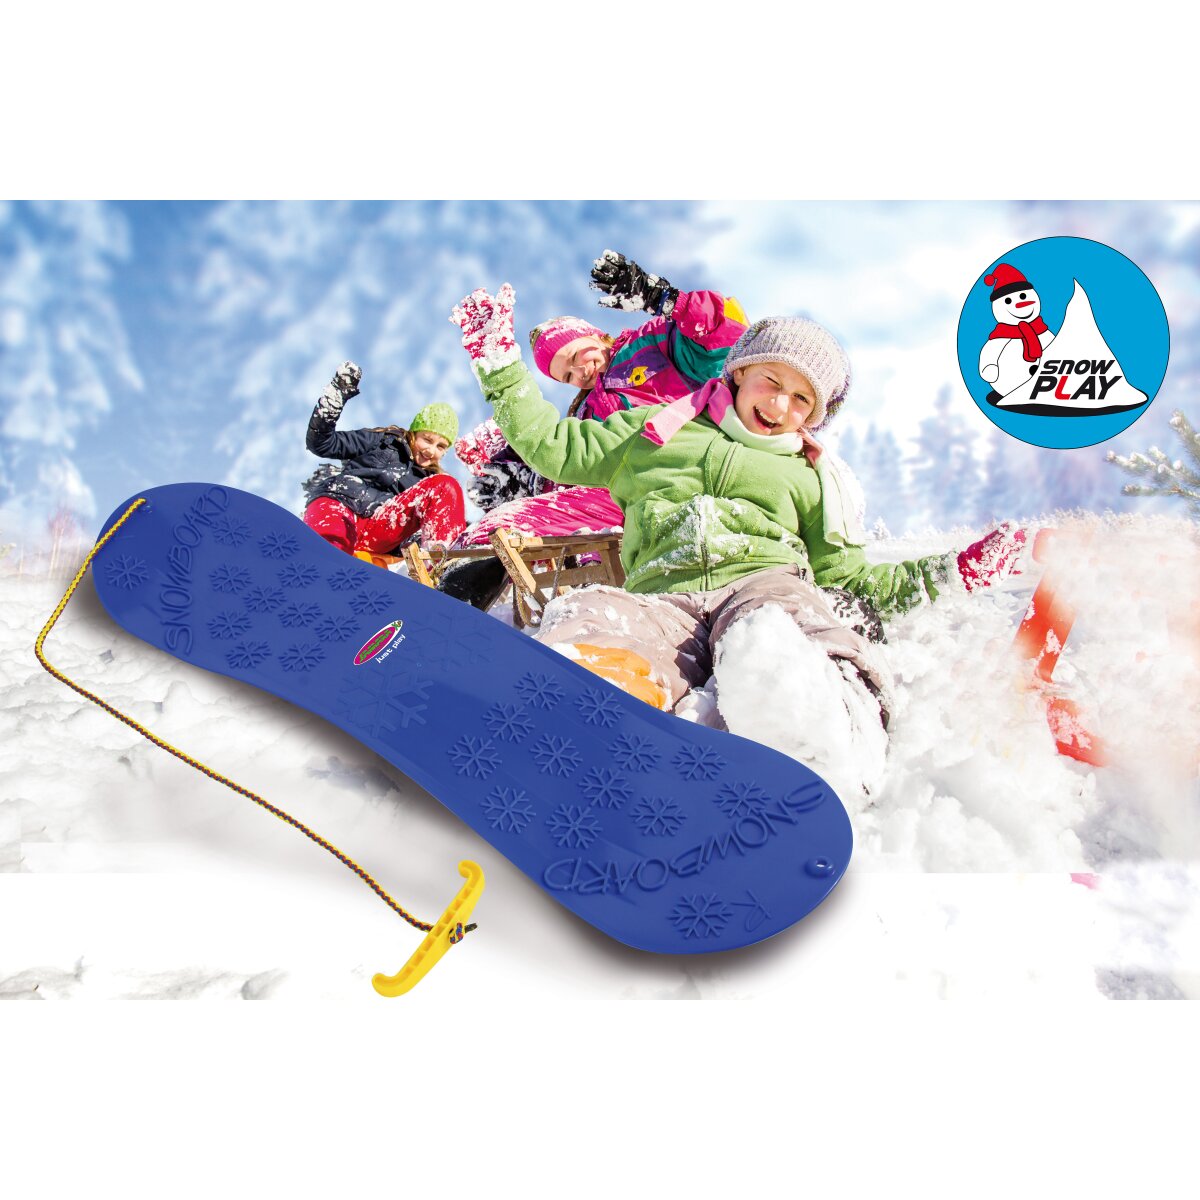 Snow Play Snowboard 72cm blau  